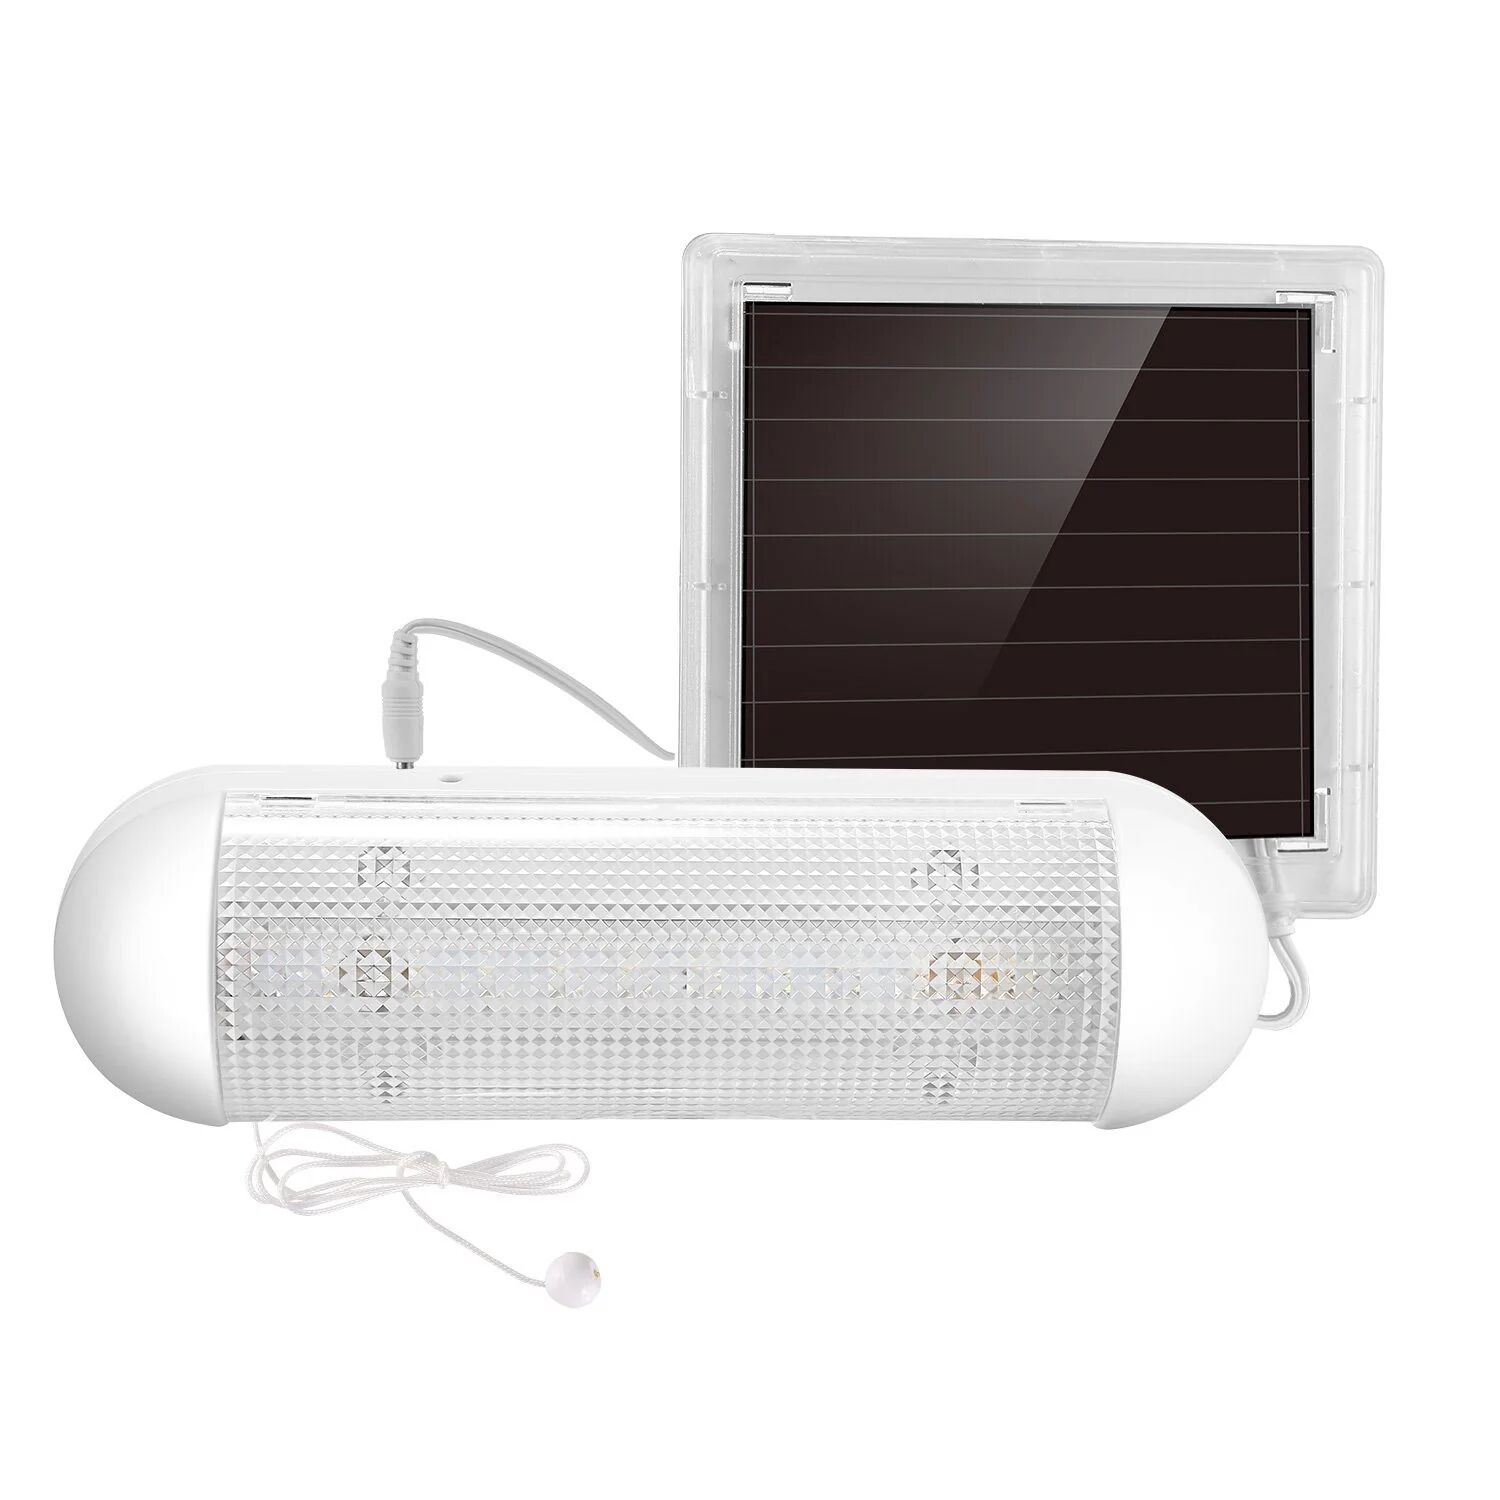 DailySale LED Solar Lights Powered Security Light Kit